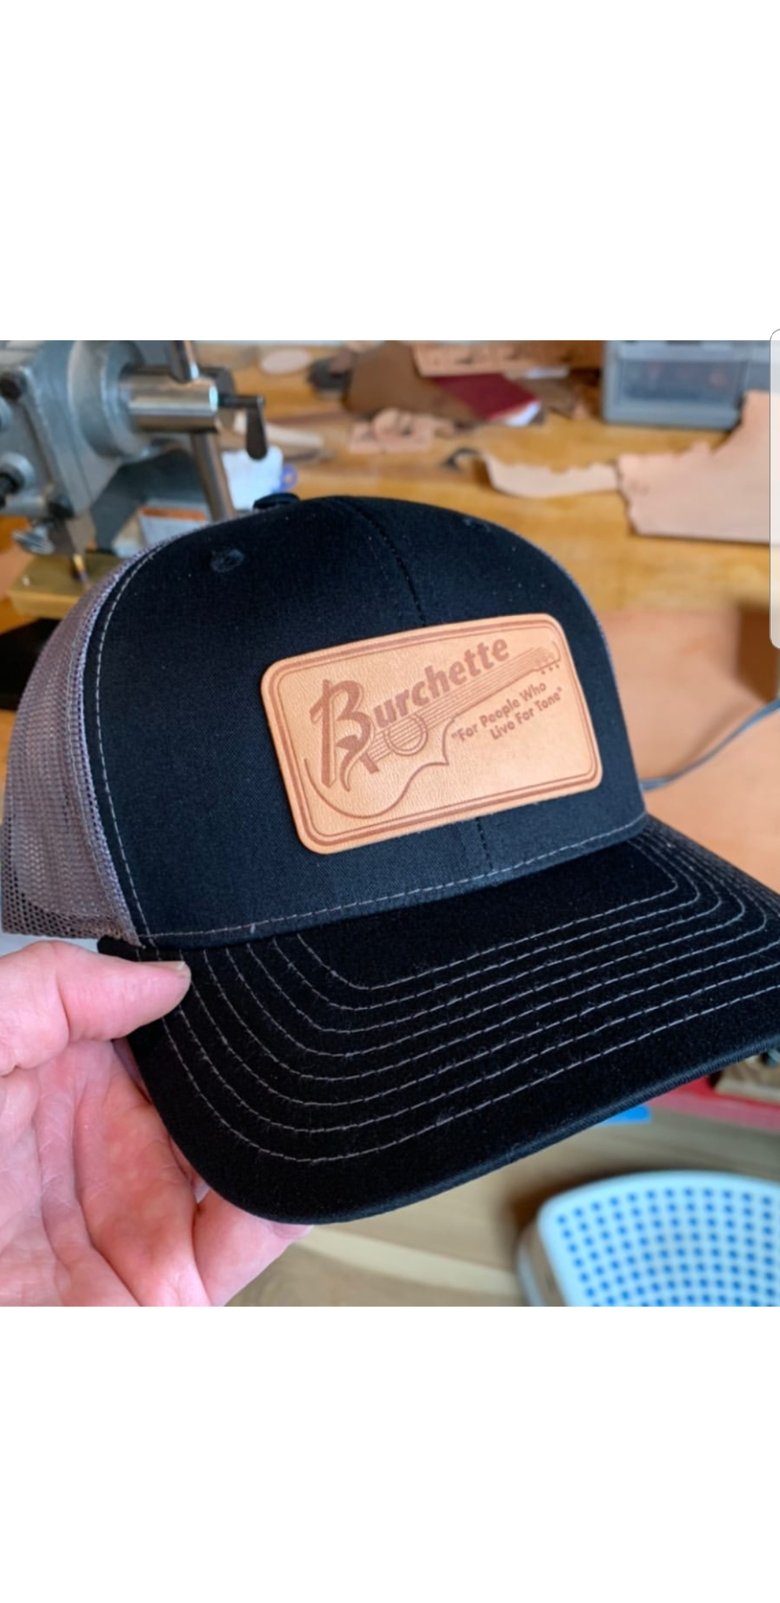 Image of Koch Leather Patch trucker hat